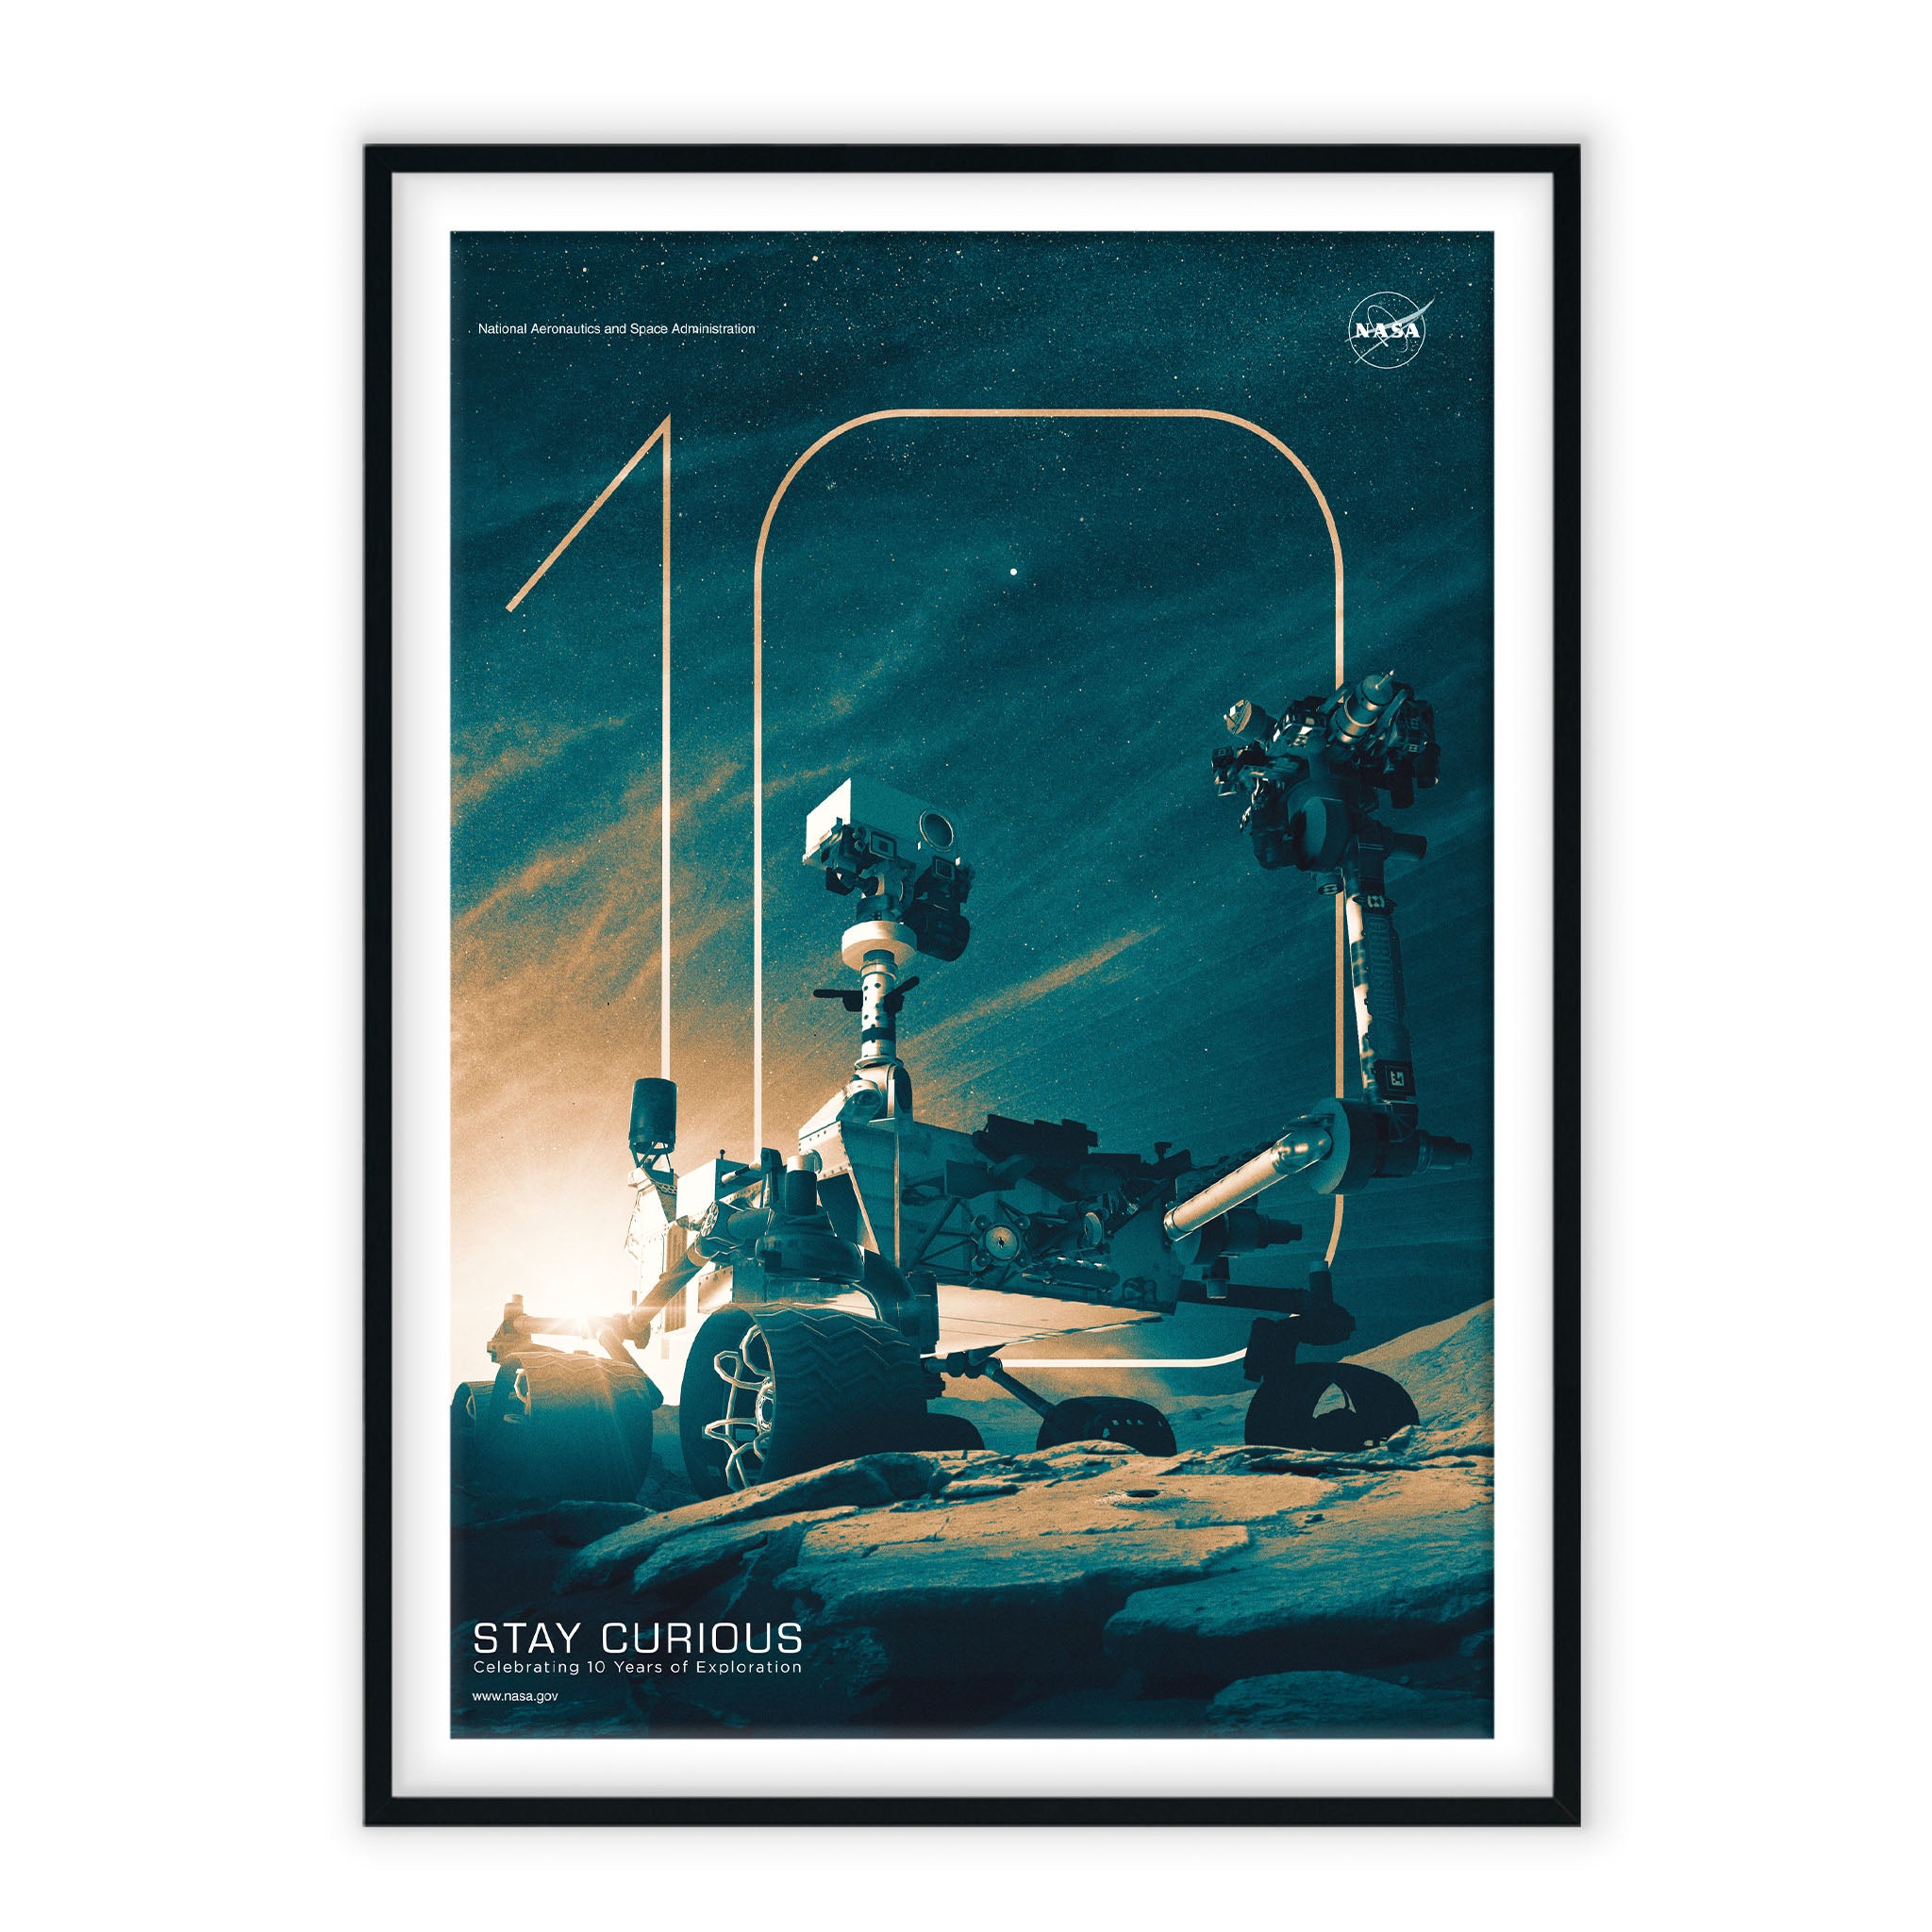 10 years of Curiosity on Mars - NASA Poster